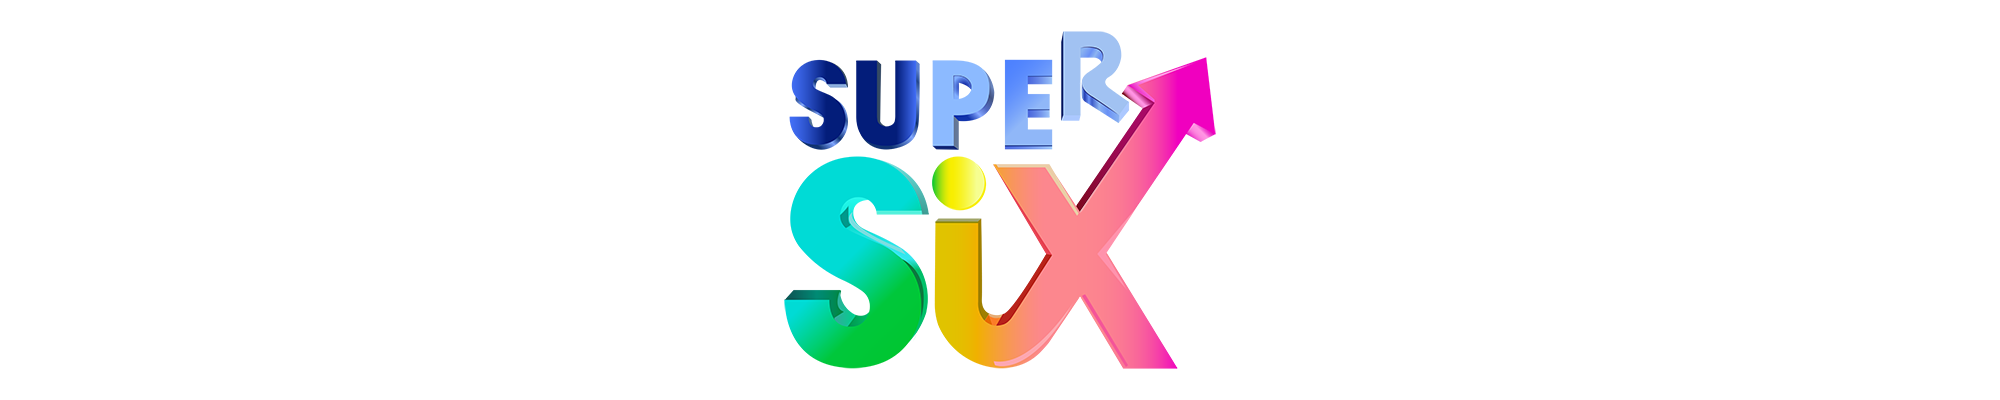 Super six. Супер ТВ логотип. Six point Six лого. Логотип канала super Baltic. Superwave логотип.